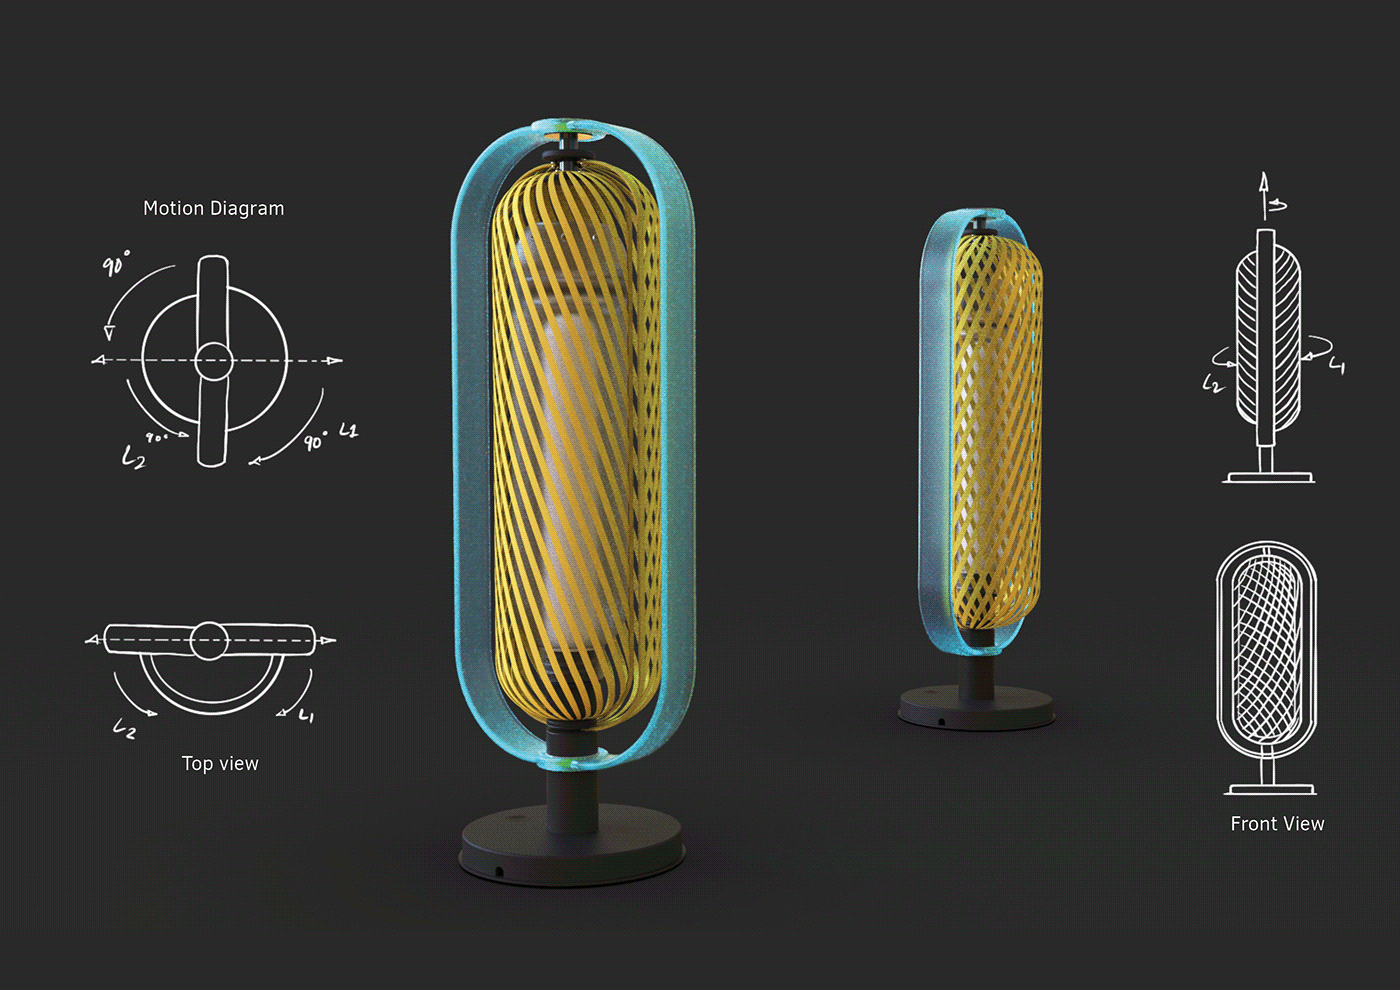 bali bamboo LightingDesign craft craftsmanship experiencedesign interactiondesign Lamp Sustainable traditional